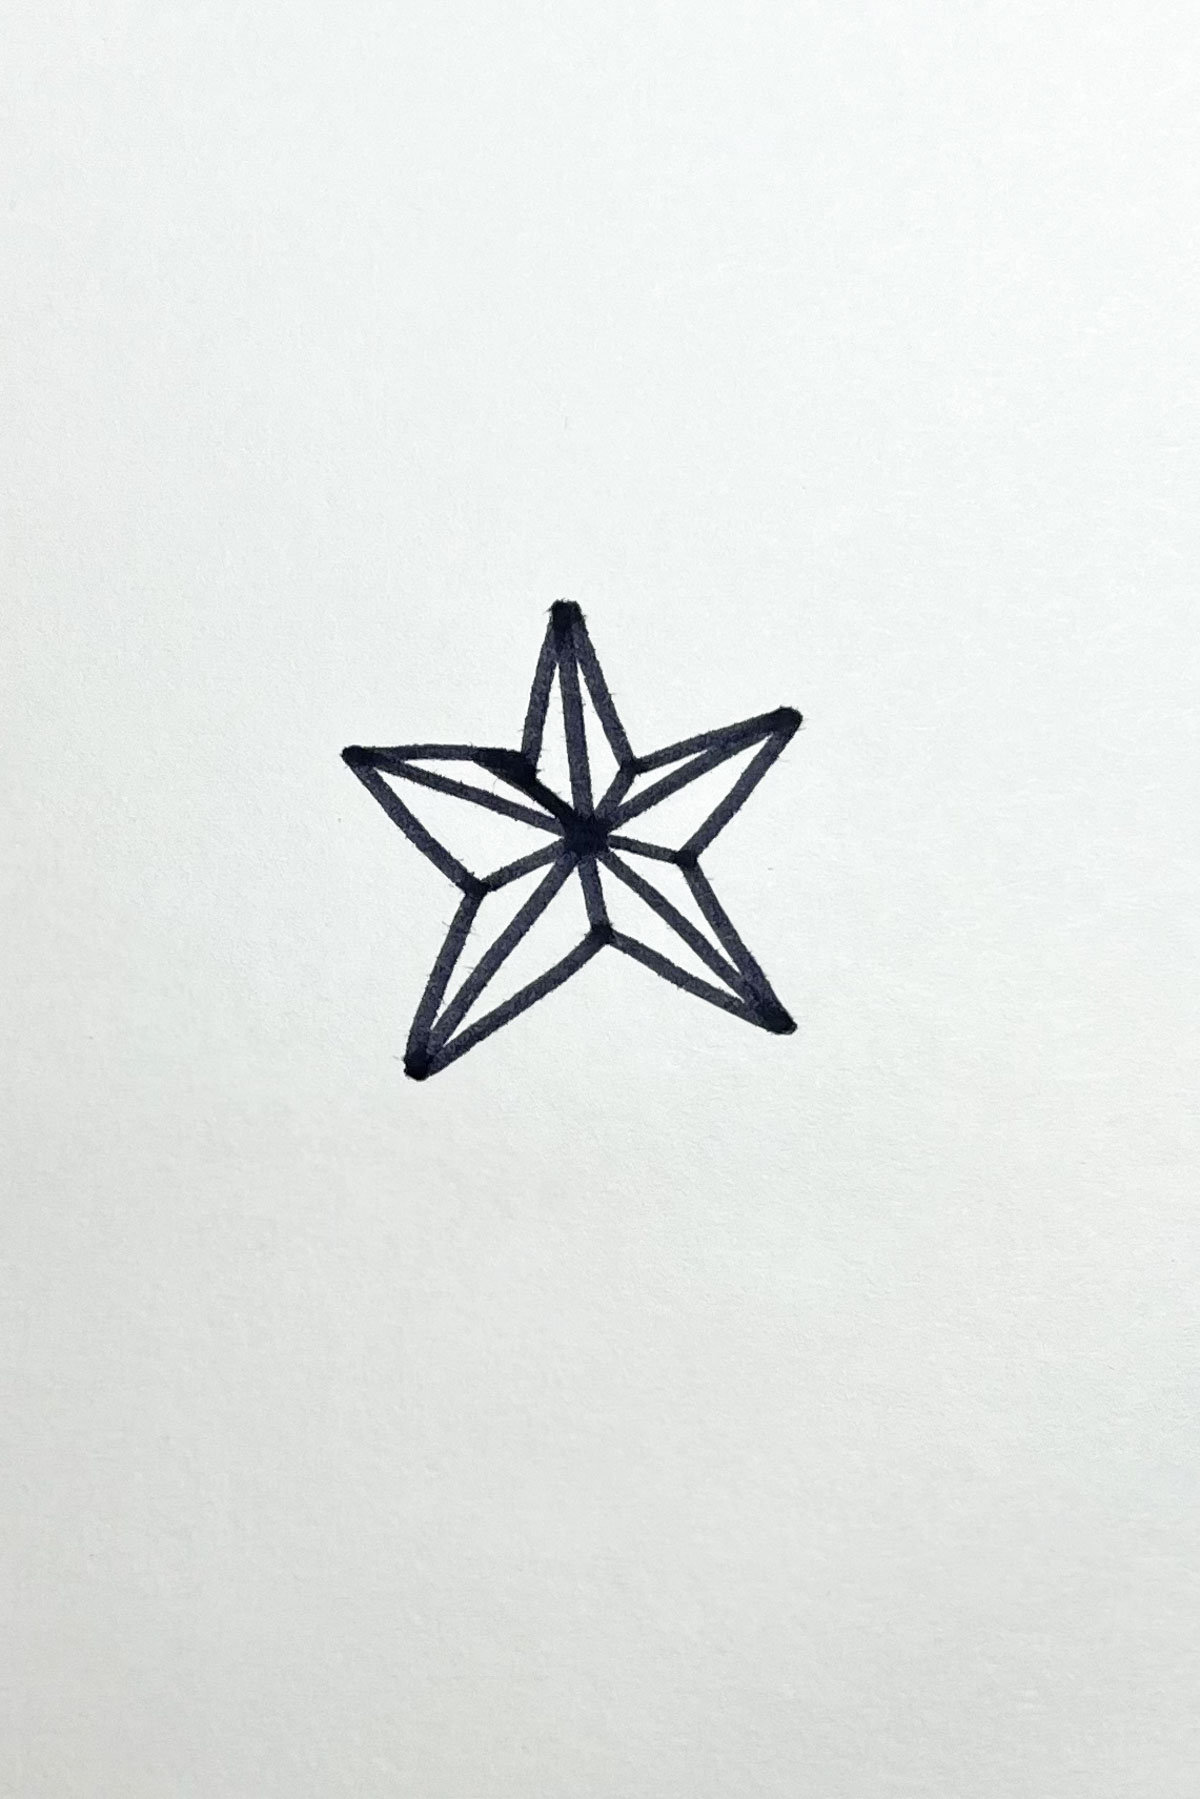 folded star drawing